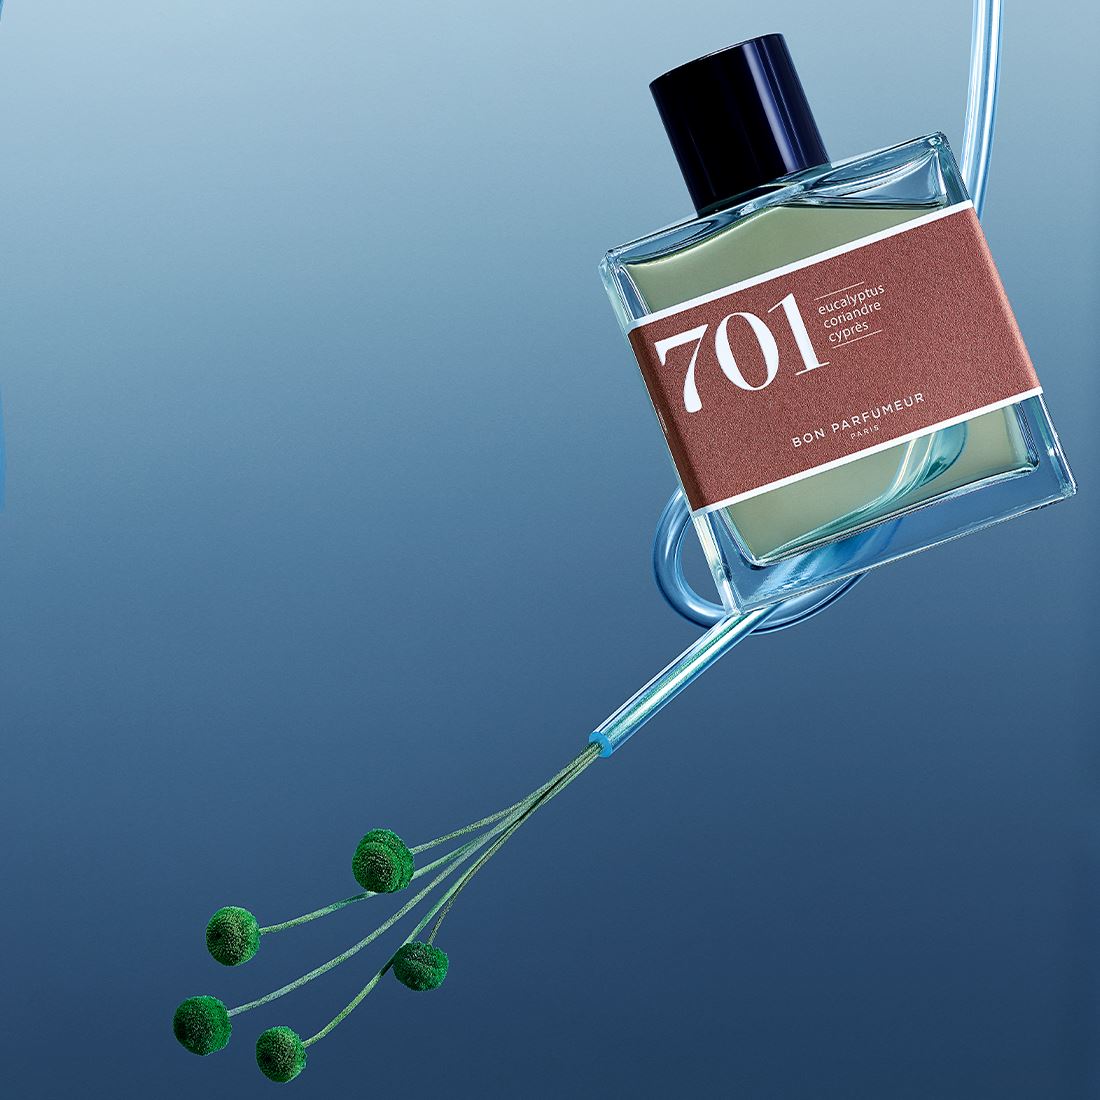 Bon Parfumeur - 701